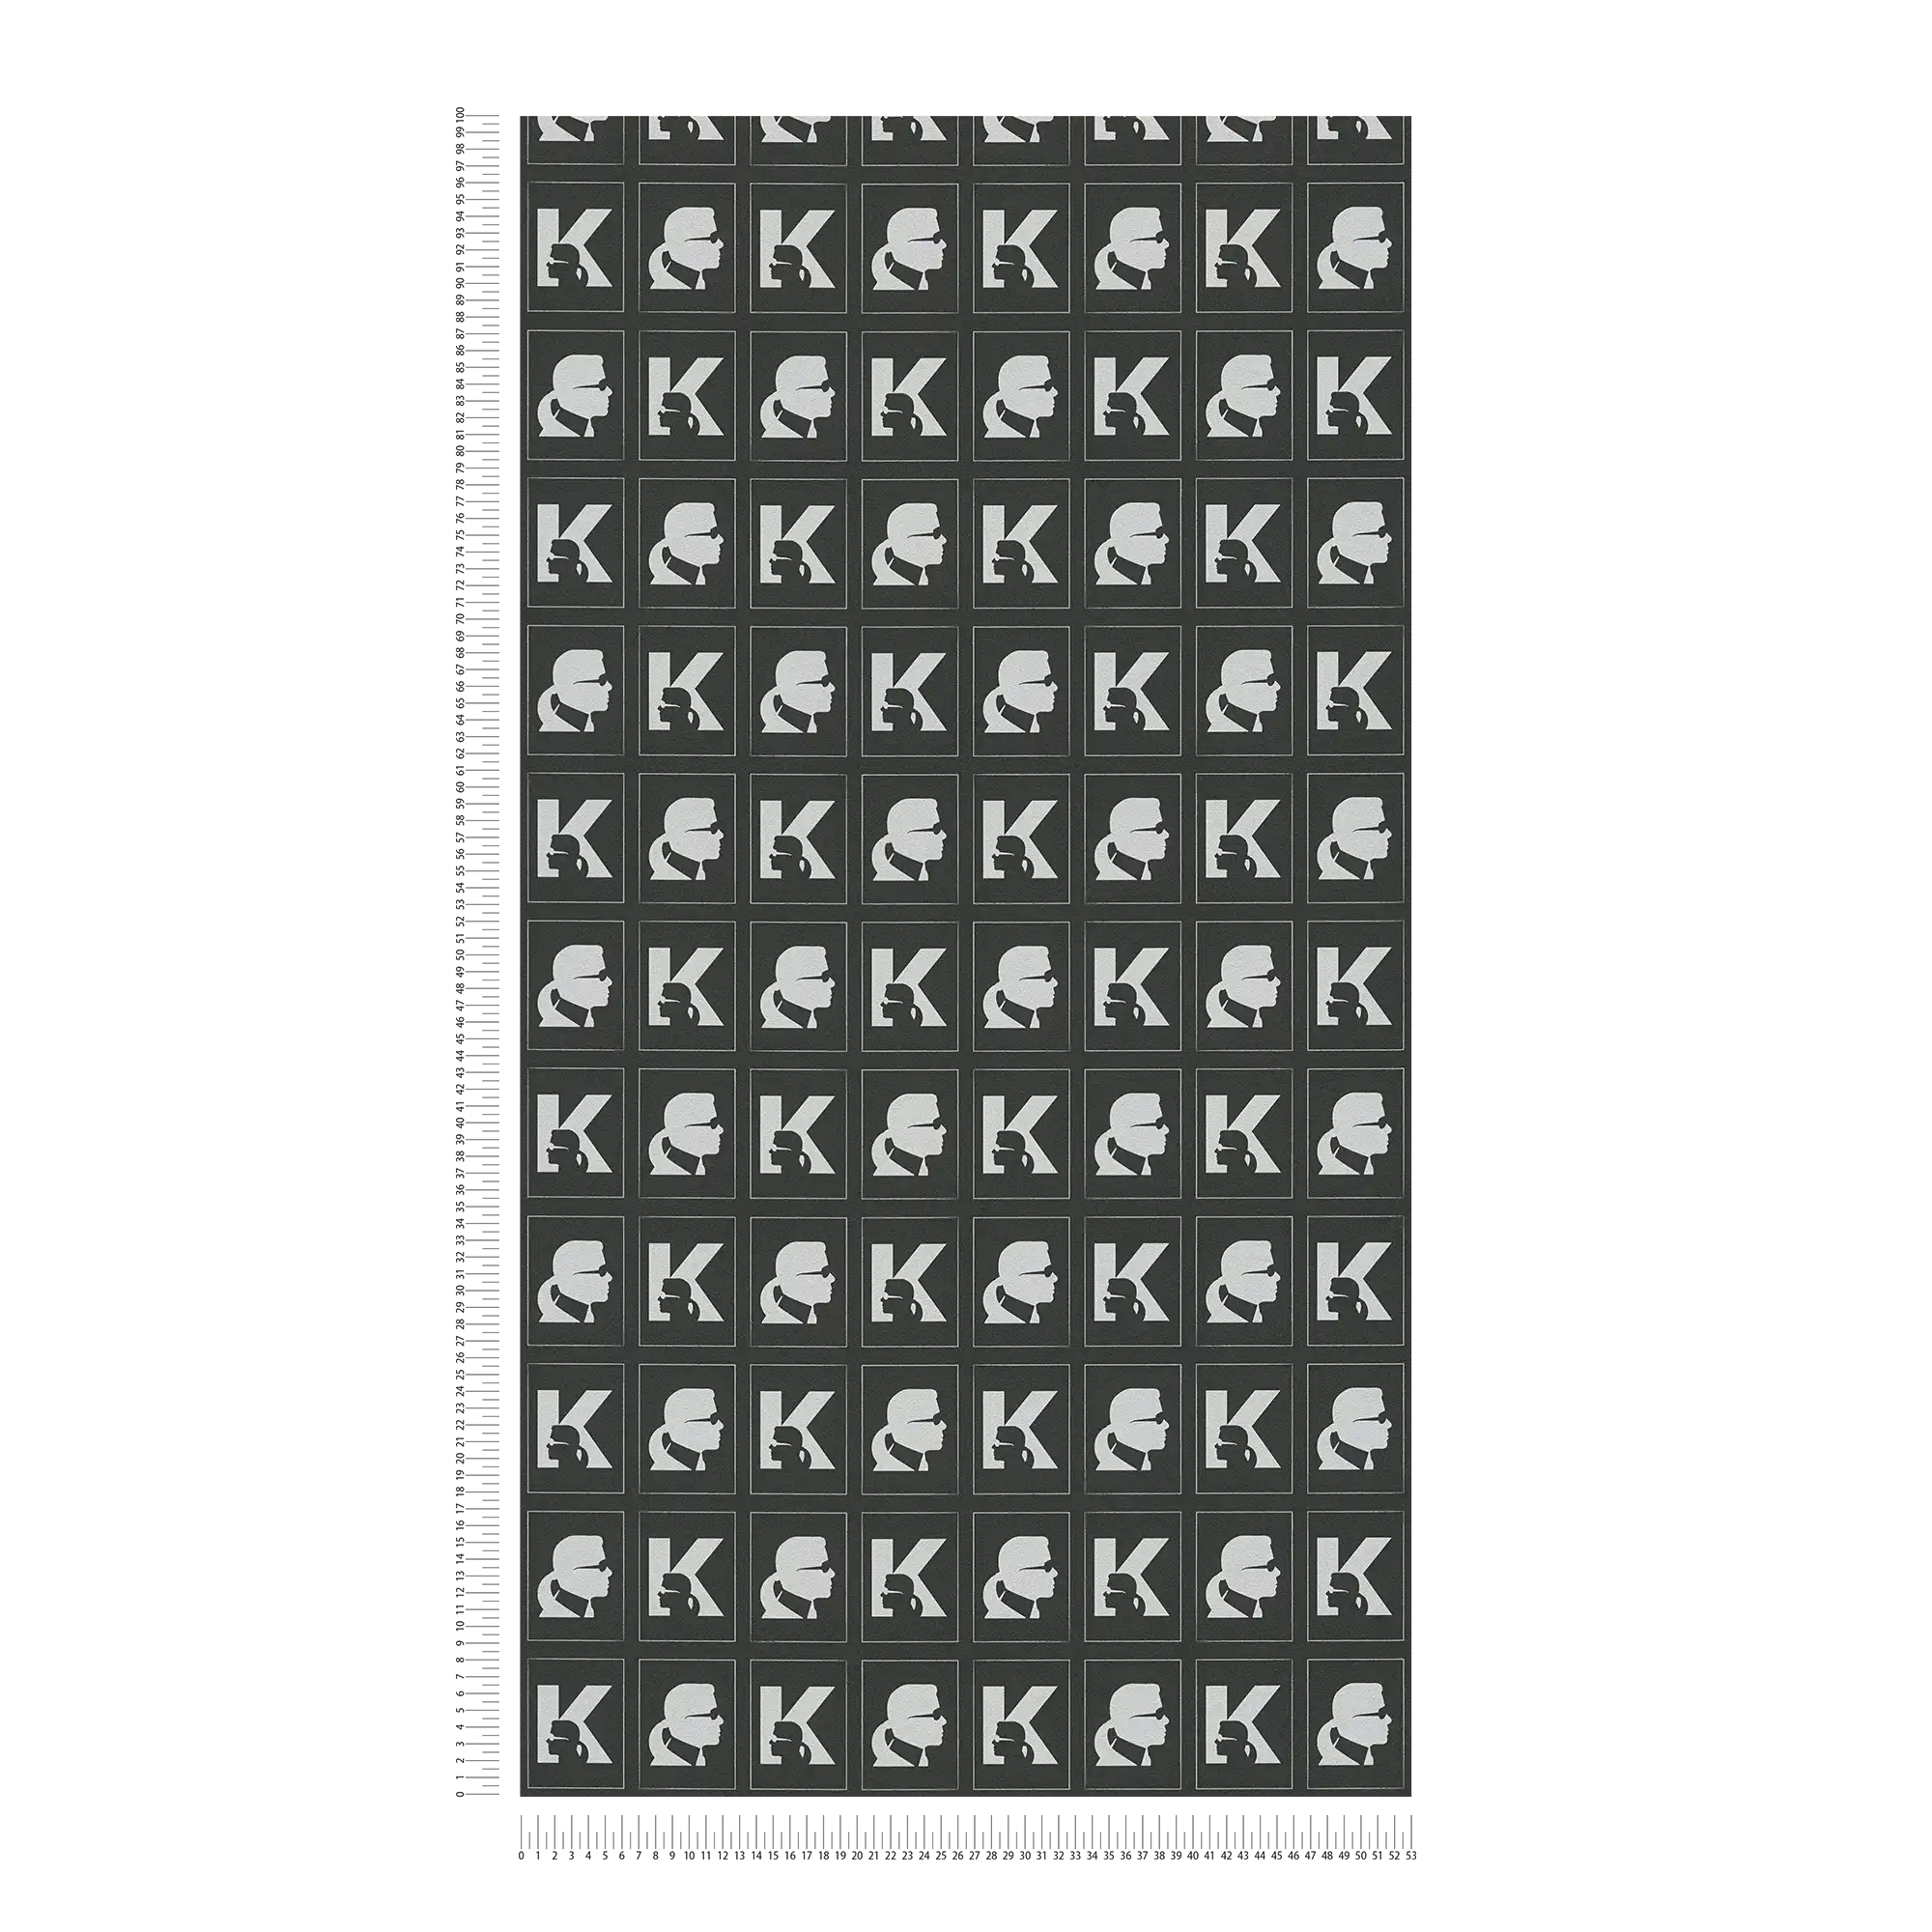             Papel pintado no tejido Karl LAGERFELD con motivo de emblema - metálico, negro
        